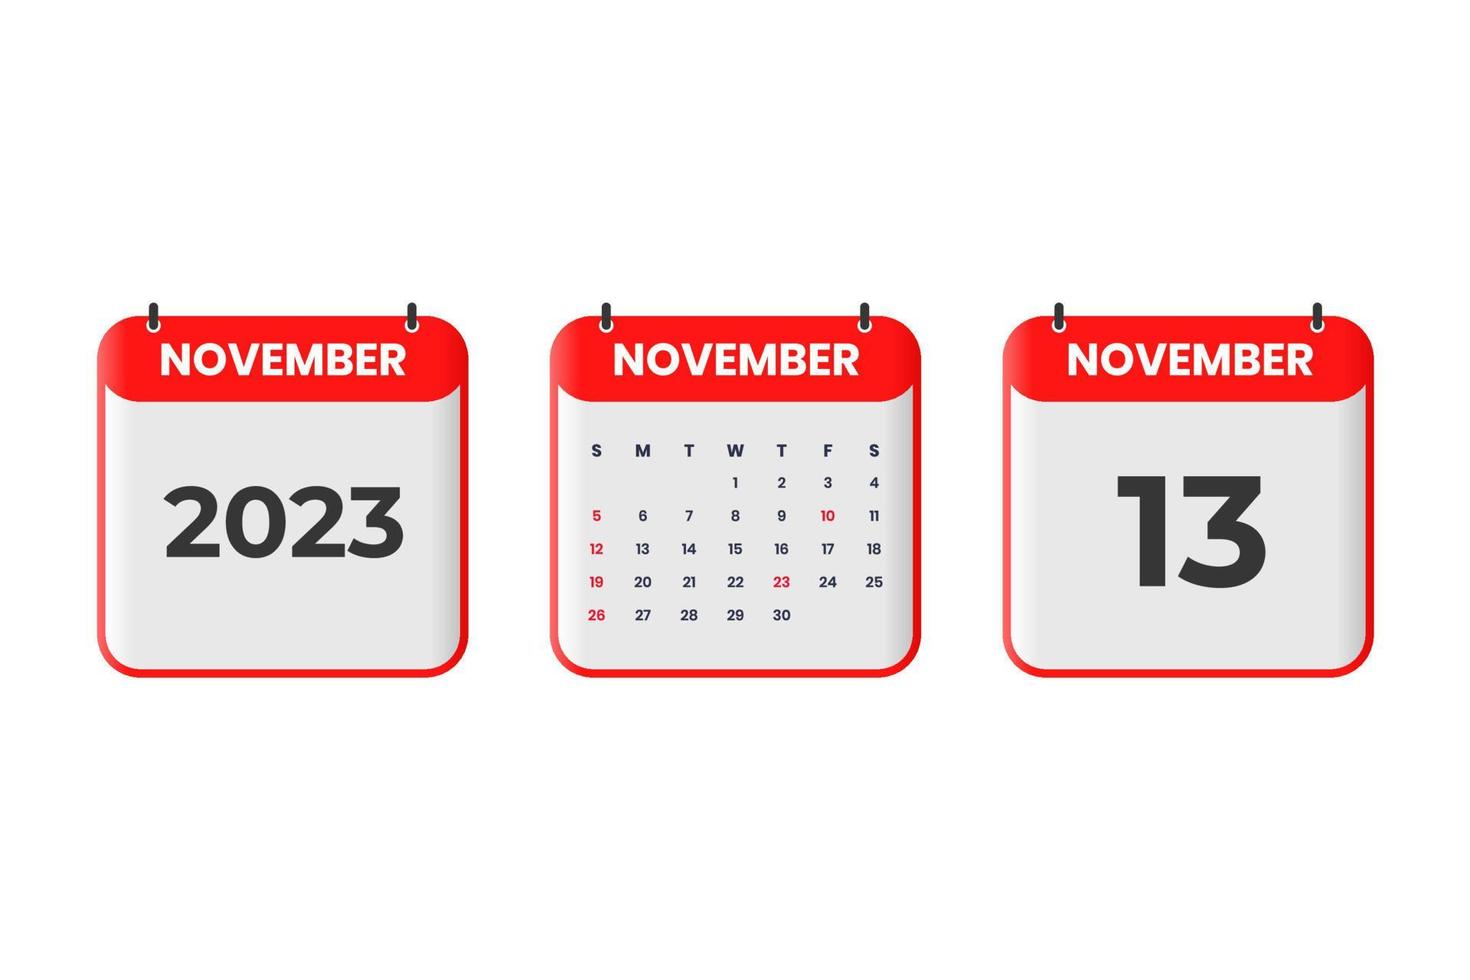 diseño de calendario de noviembre de 2023. 13 de noviembre de 2023 icono de calendario para horario, cita, concepto de fecha importante vector